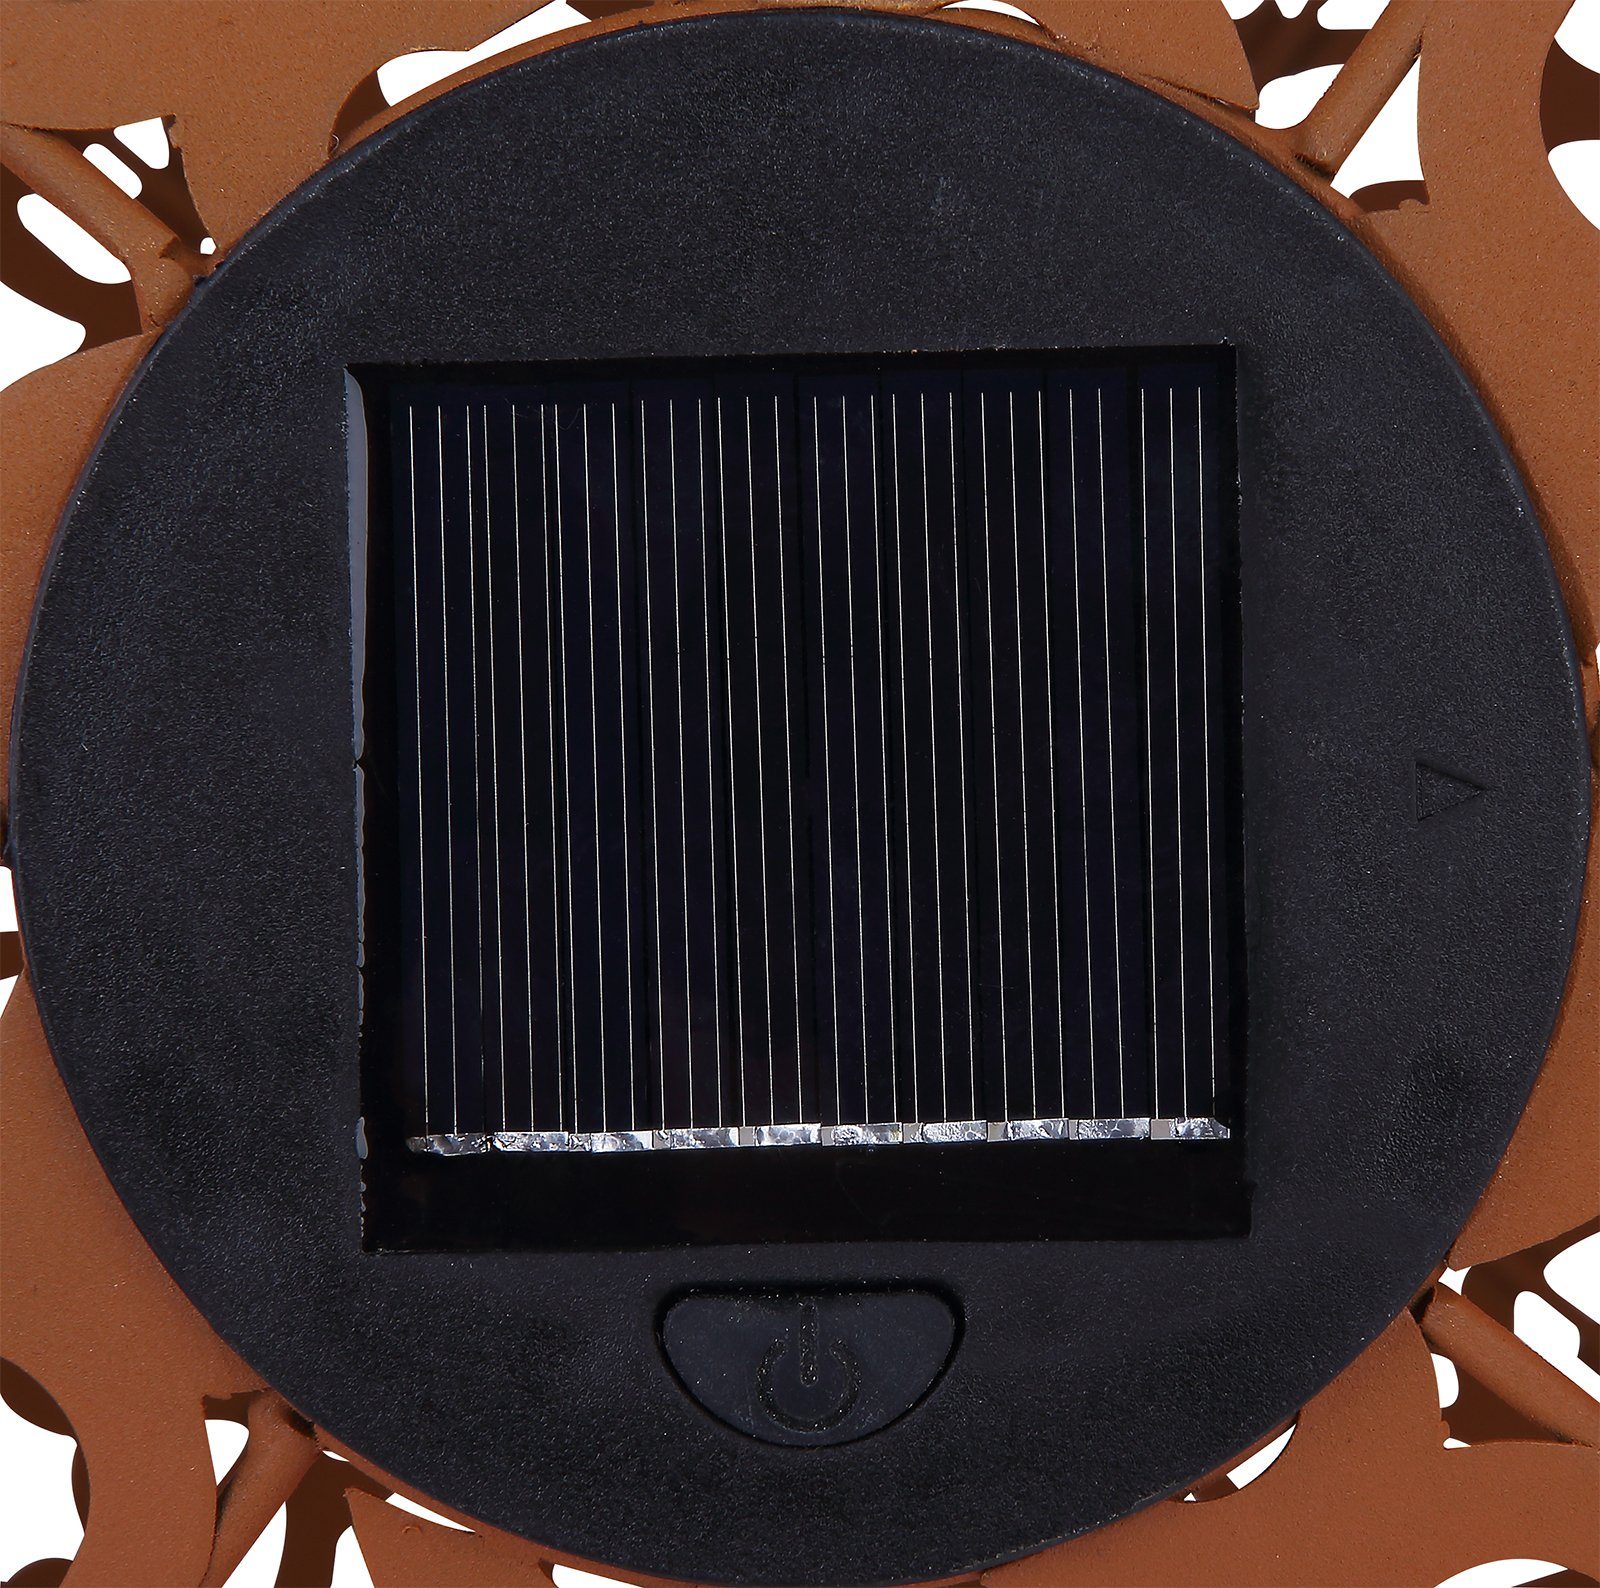 bmf-versand Außen Kugel rost Metall Garten 2er Solarleuchte Solarlampe Set LED Solarleuchte